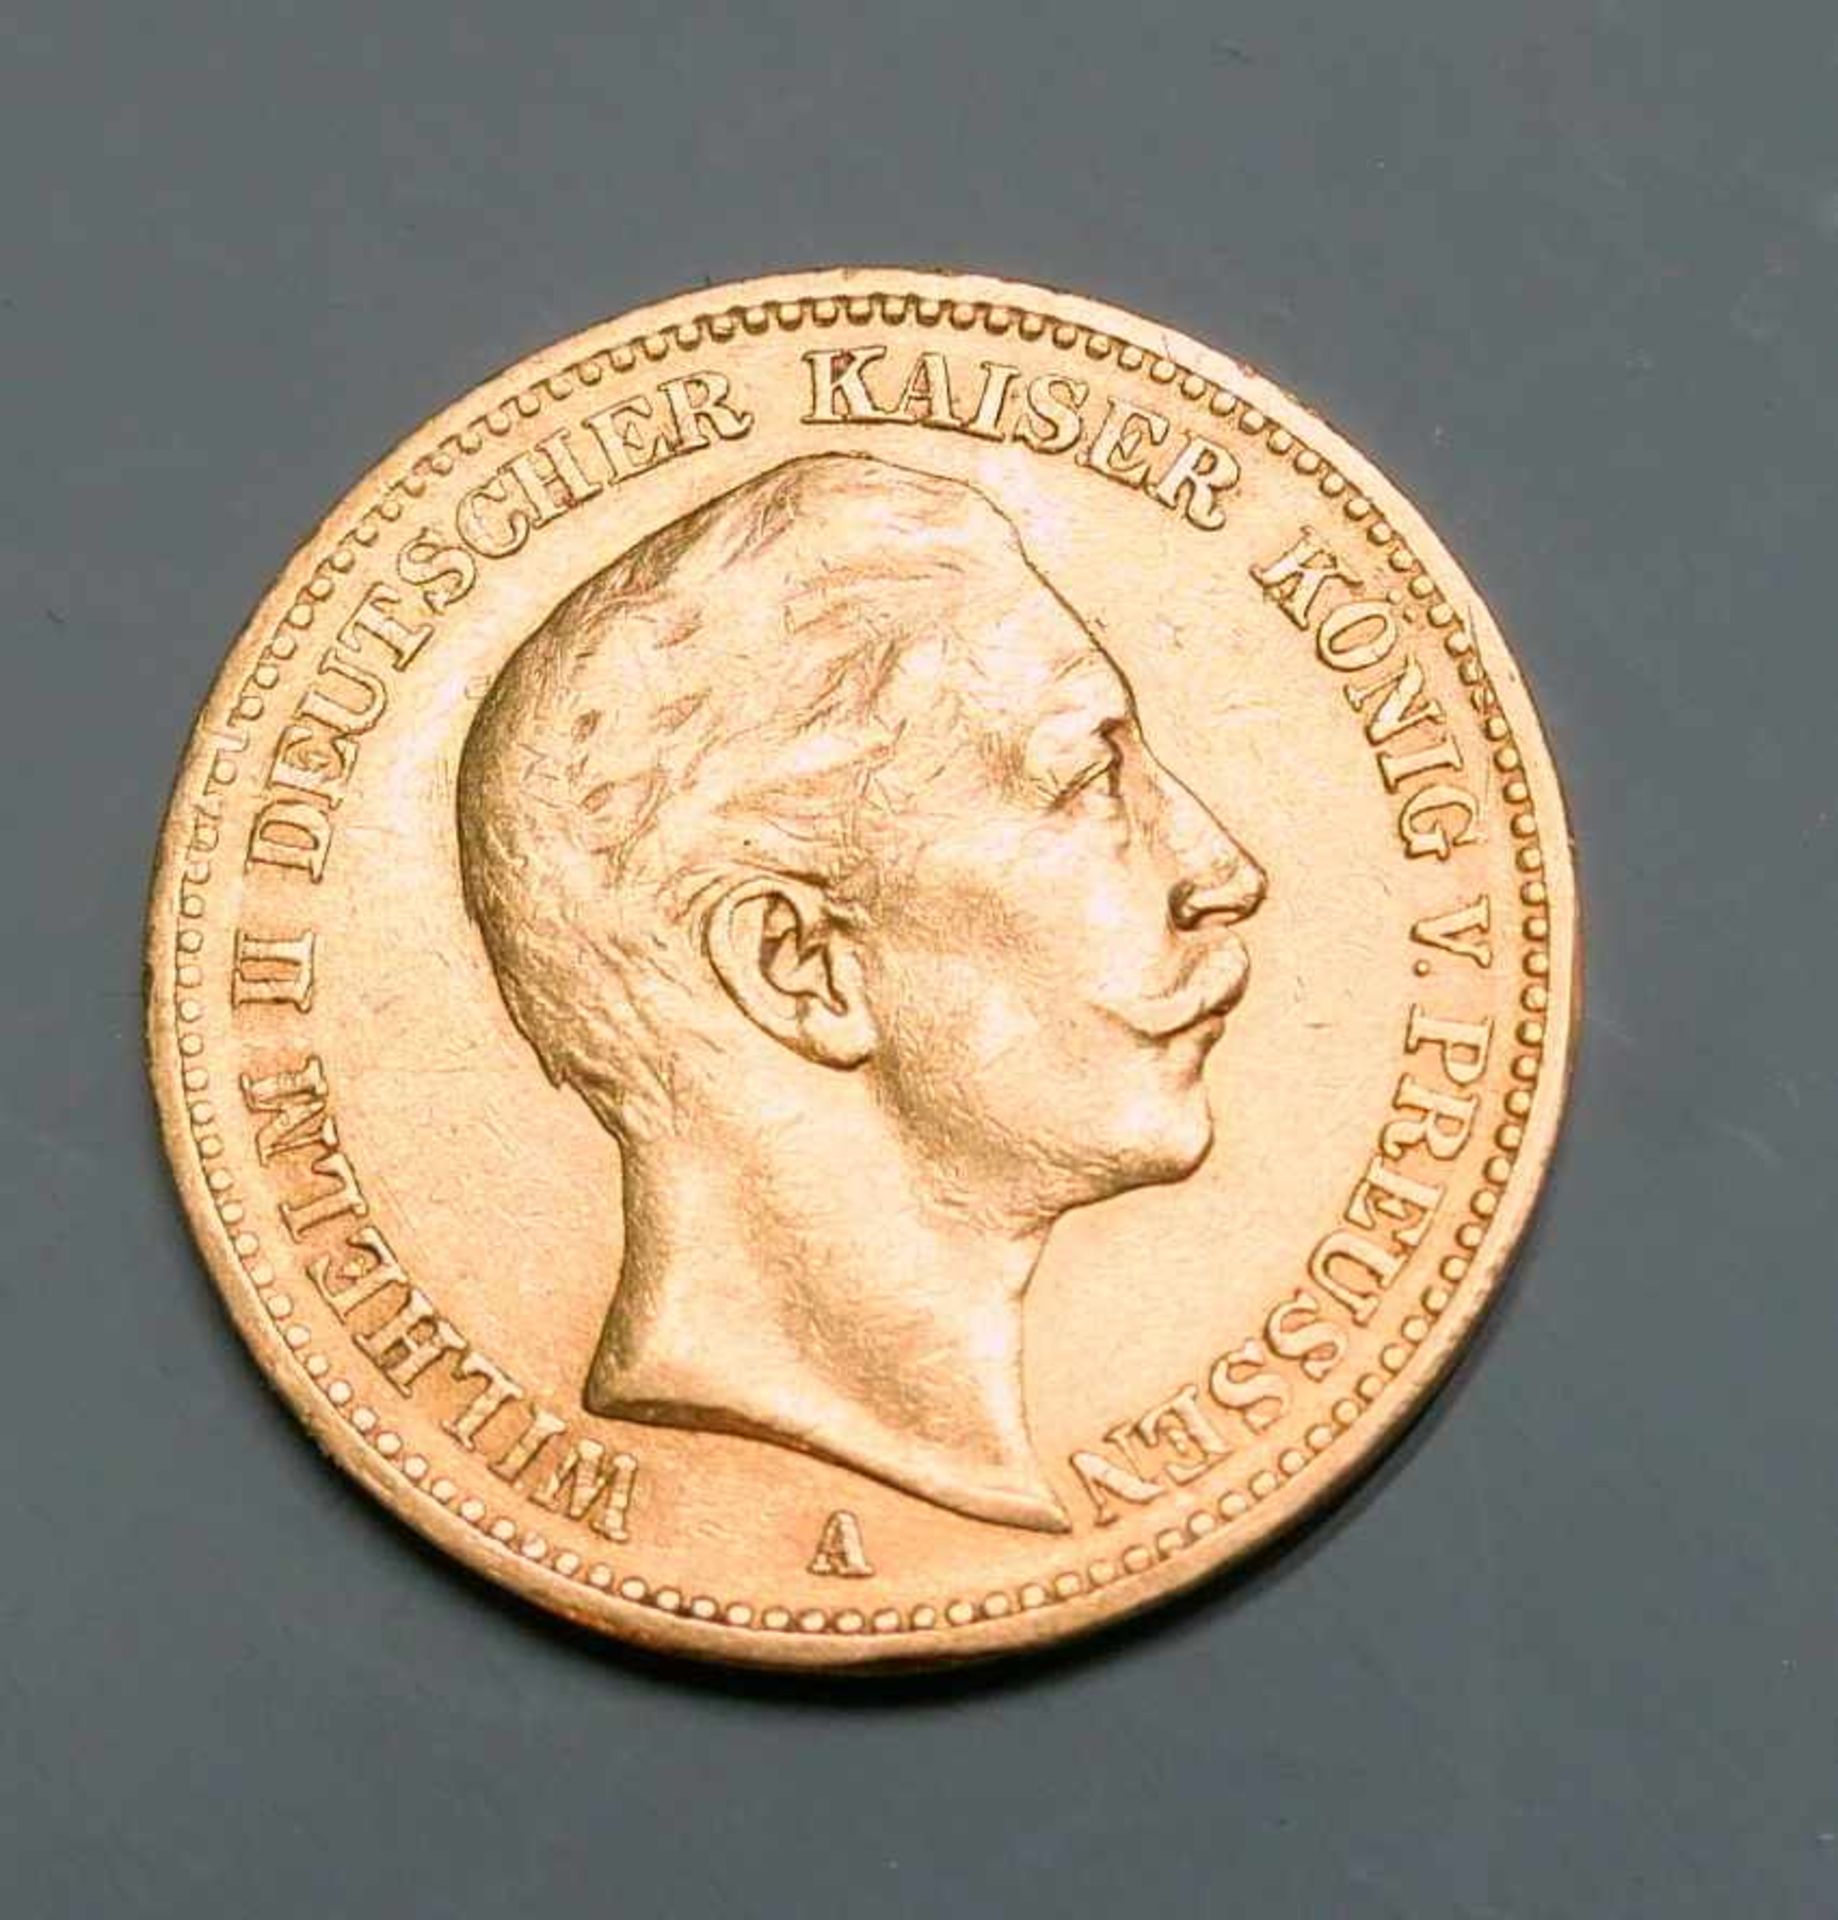 Goldmünze, 20 ReichsmarkGold. 20 Mark, Wilhelm II deutscher Kaiser König v. Preussen. A.